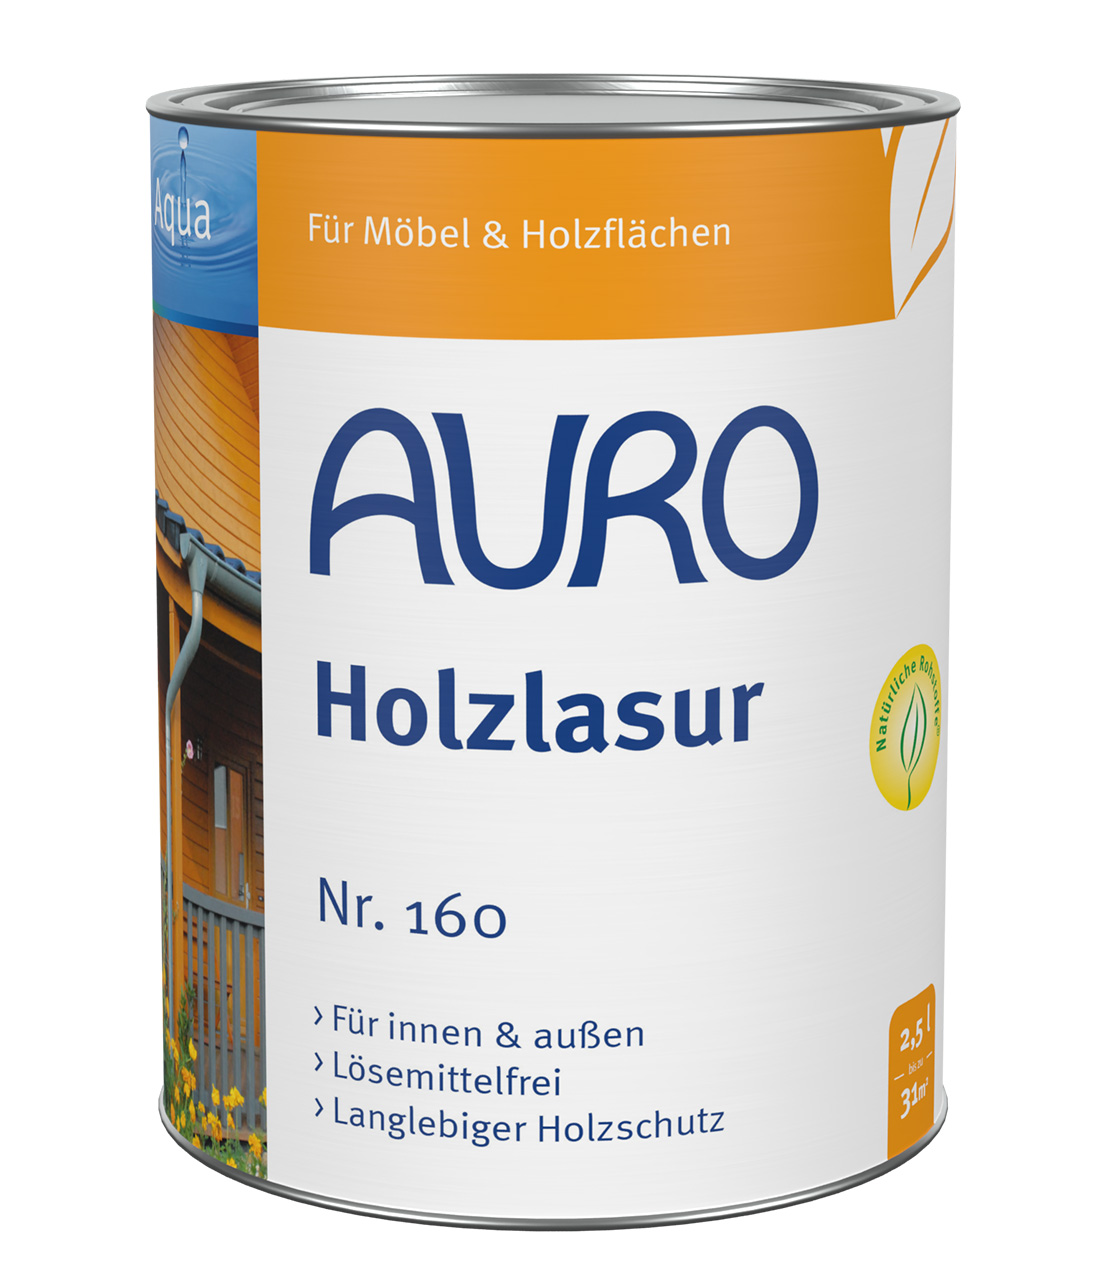 AURO Holzlasur Aqua Nr. 160